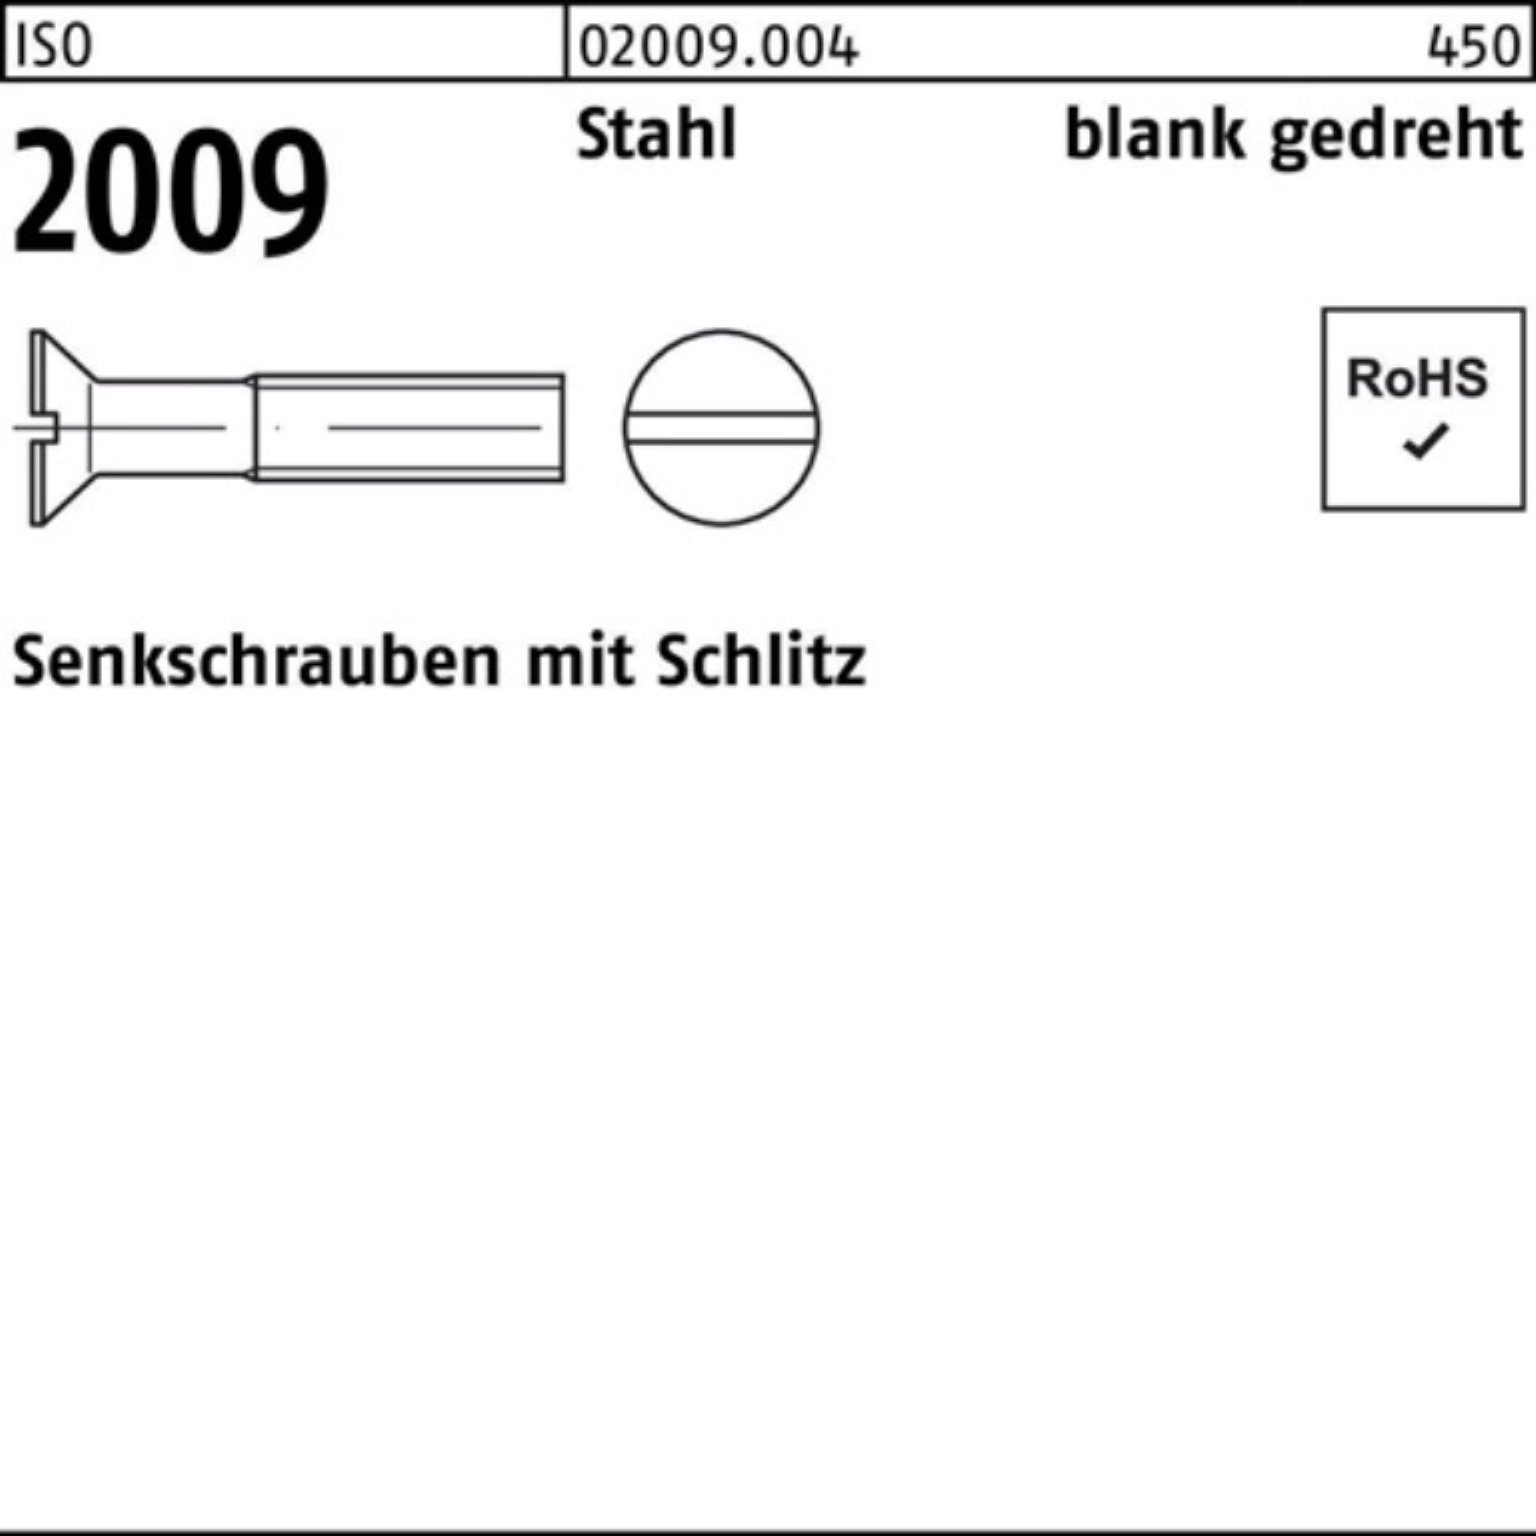 Reyher Senkschraube 100er Pack Senkschraube blank ISO gedreht Stahl 8 1 Schlitz M1,6x 2009